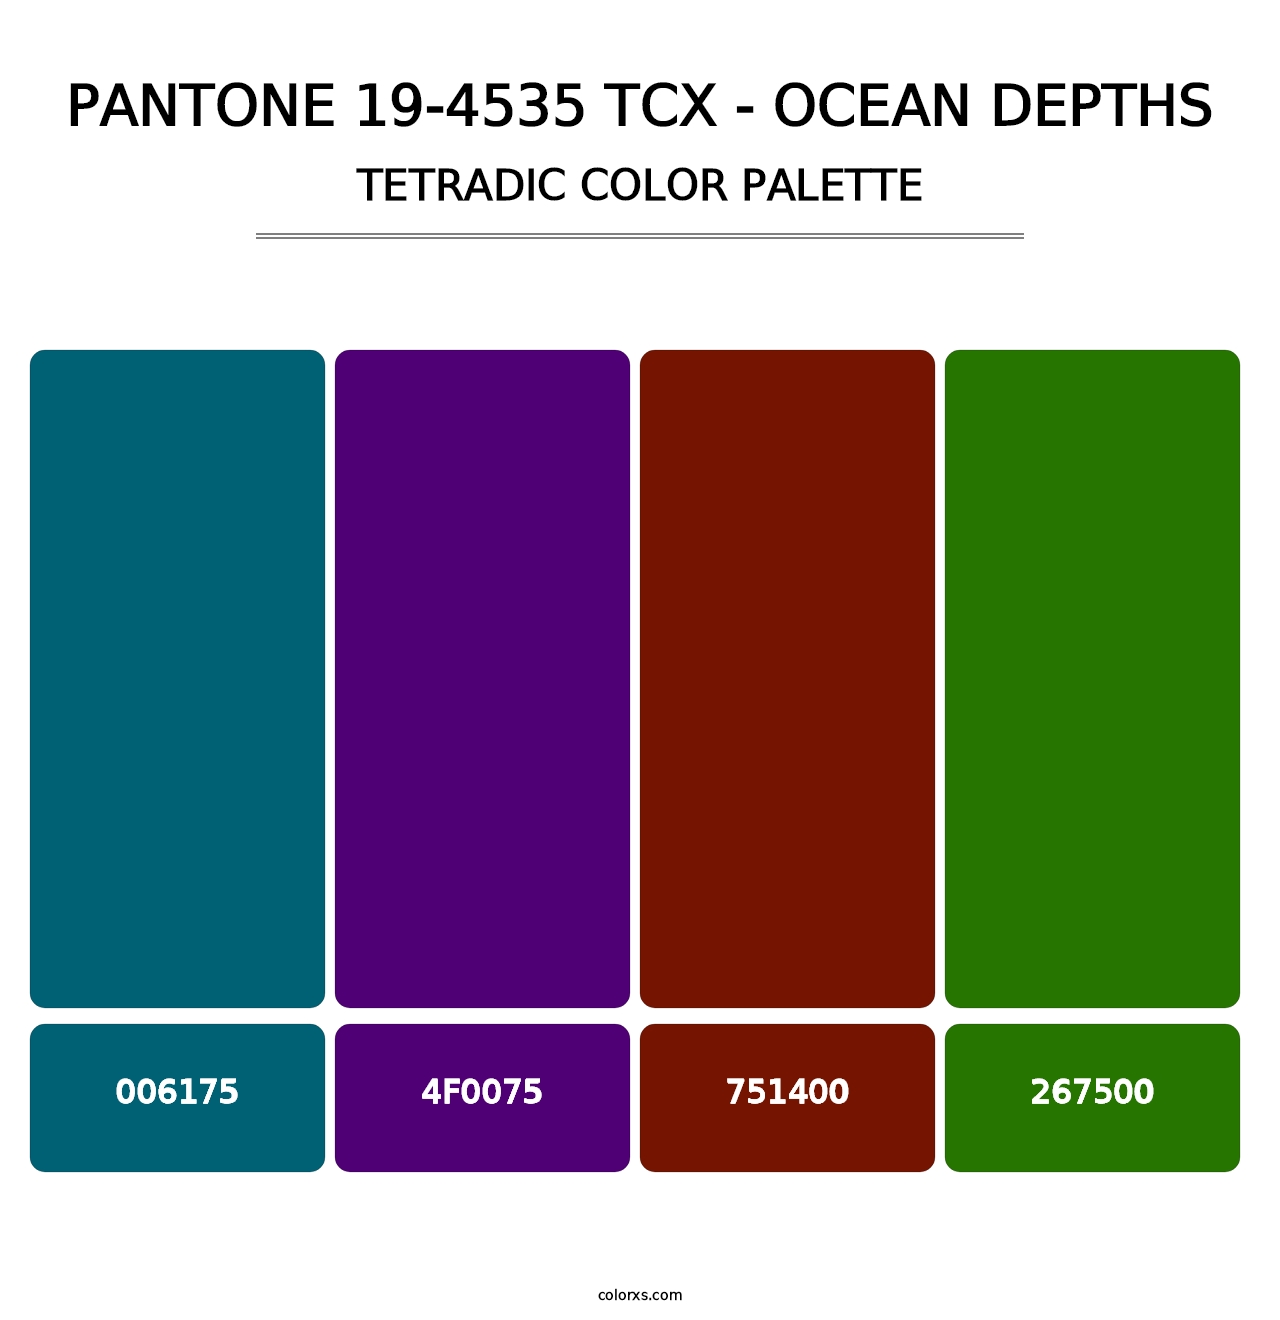 PANTONE 19-4535 TCX - Ocean Depths - Tetradic Color Palette